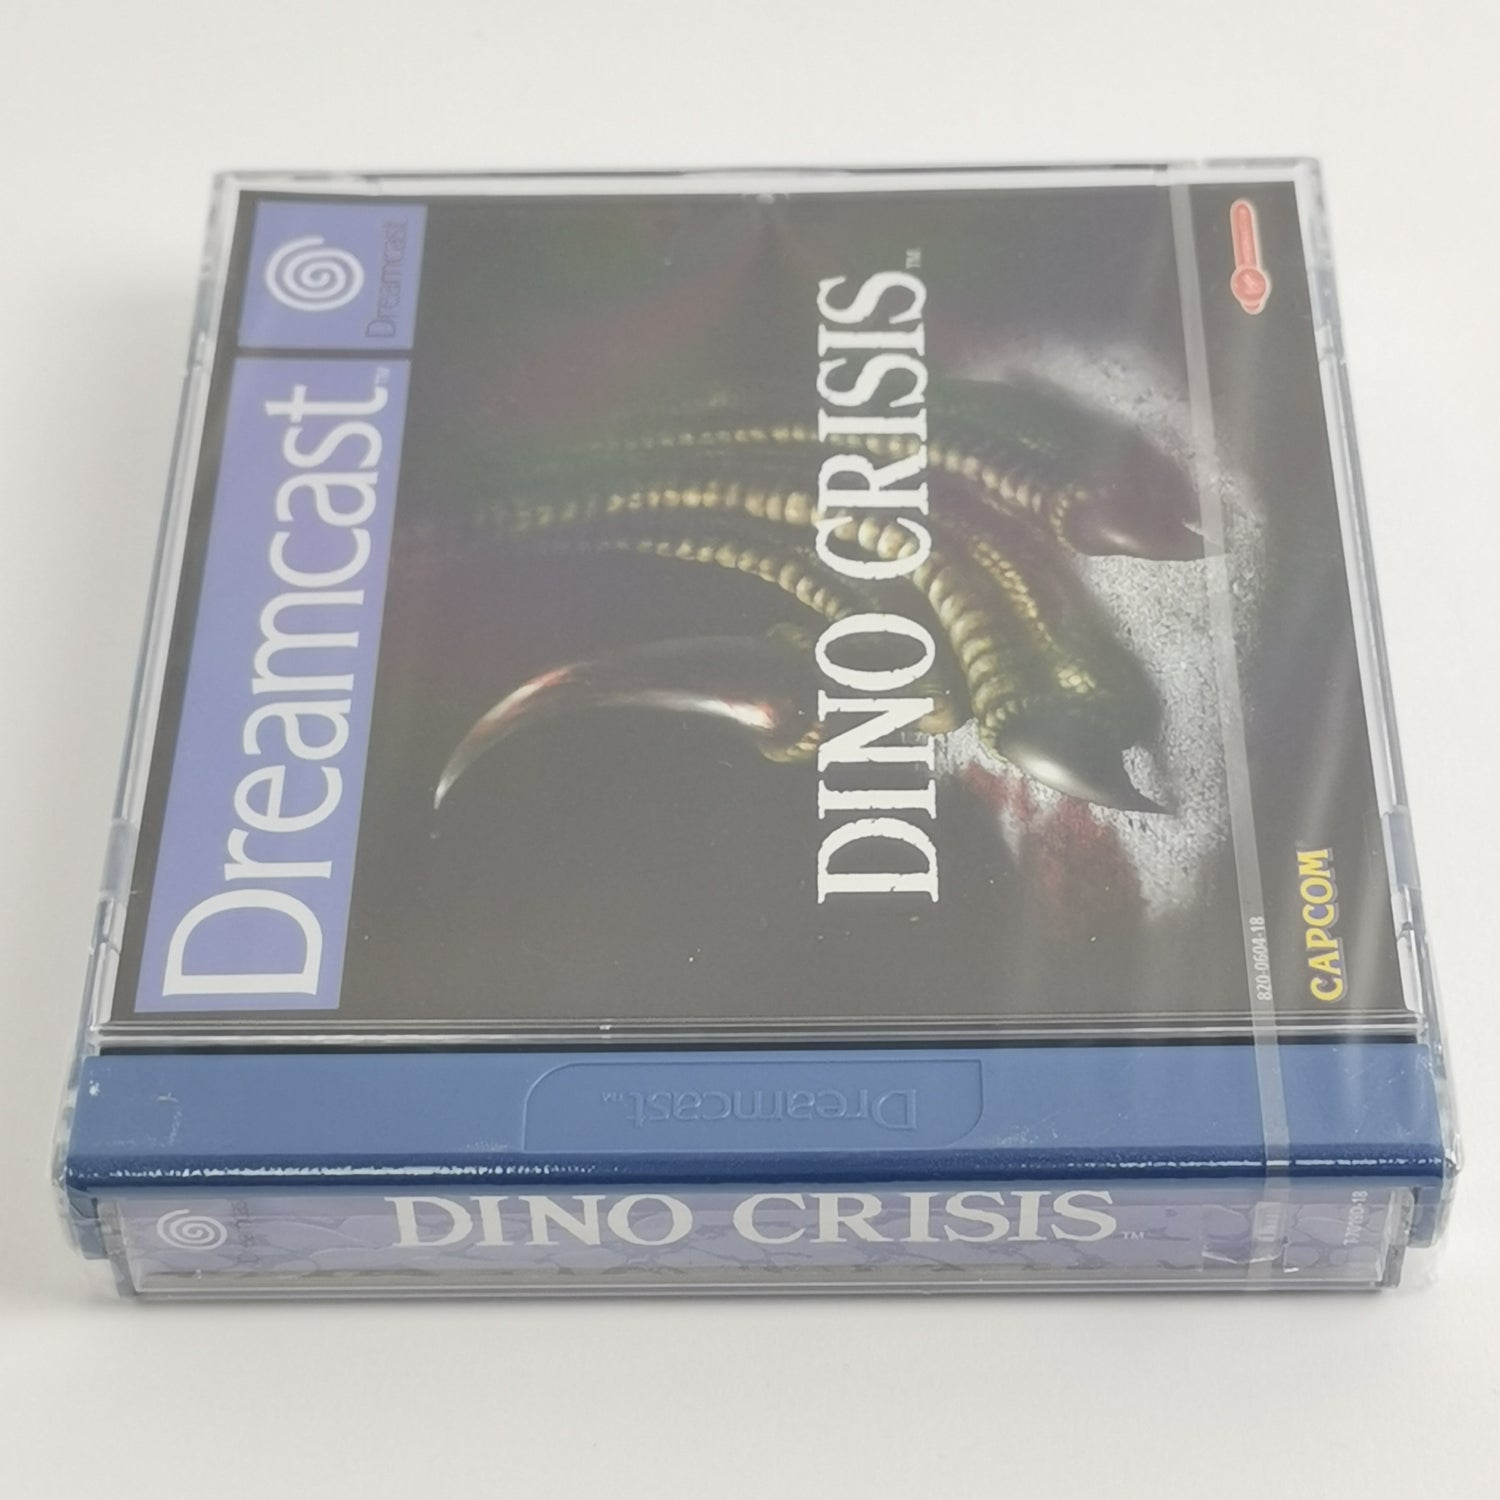 Sega Dreamcast Game: Dino Crisis - Capcom | NEW SEALED OVP - German PAL version